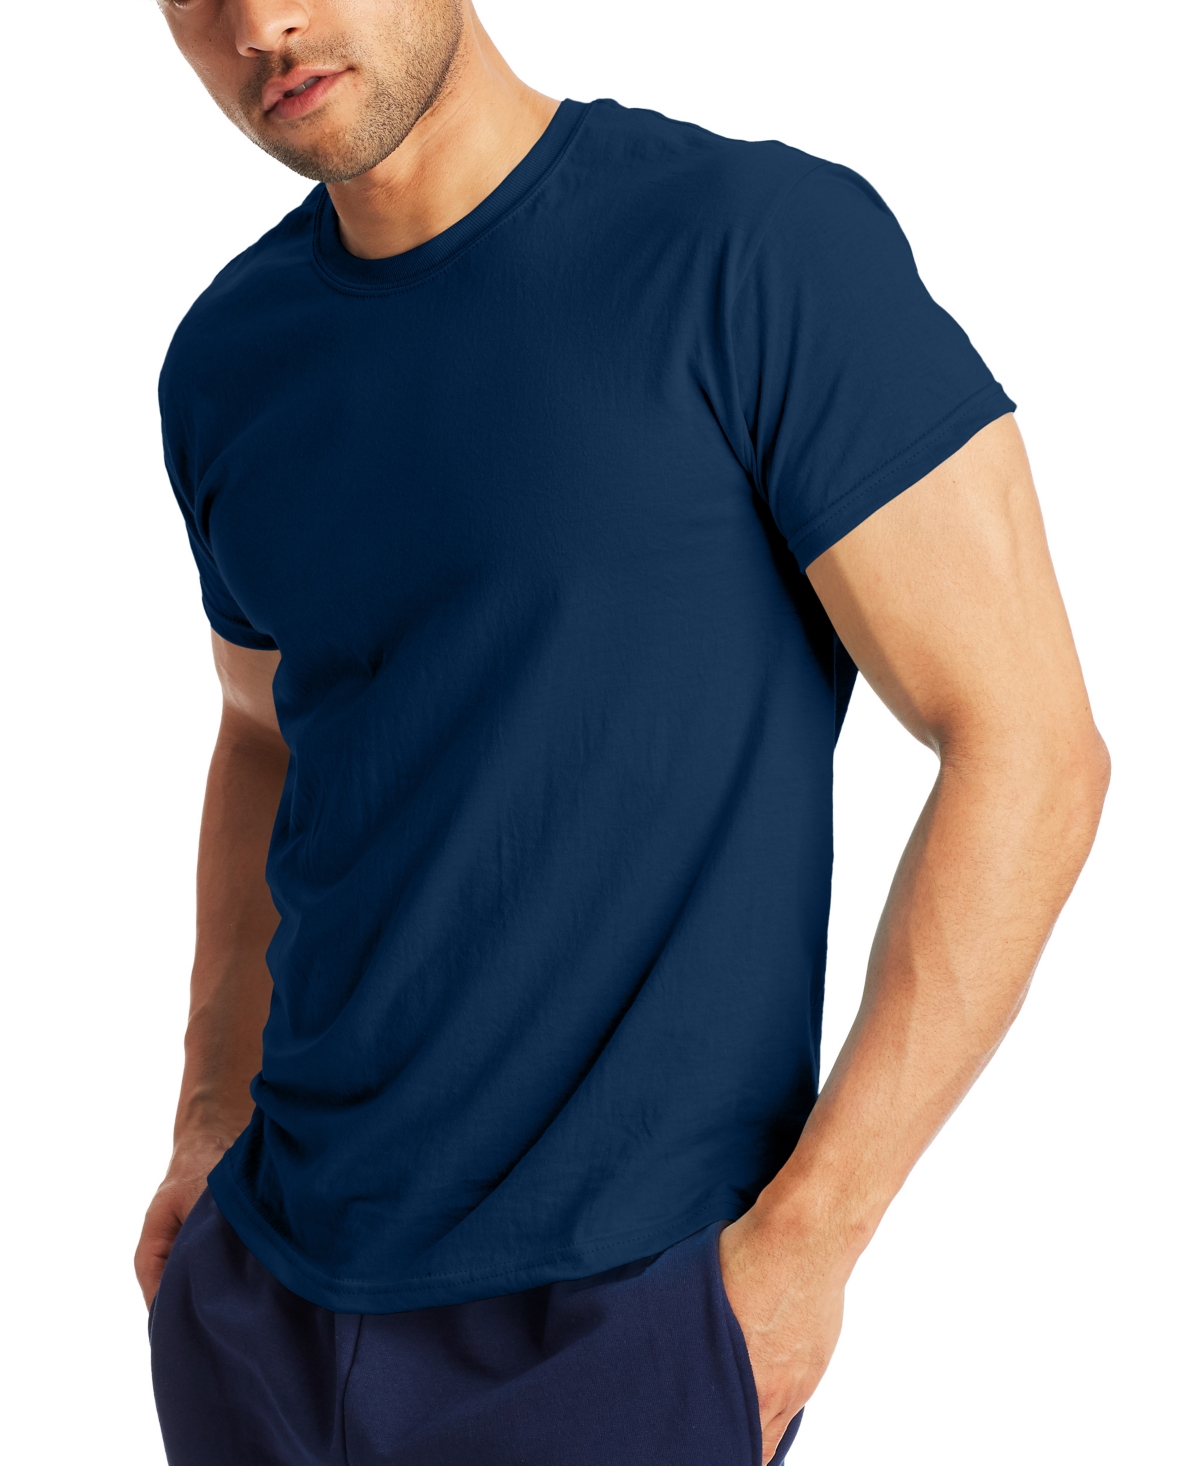 Hanes X-temp Men's Short Sleeve Crewneck T-shirt, 2-pack In Navy